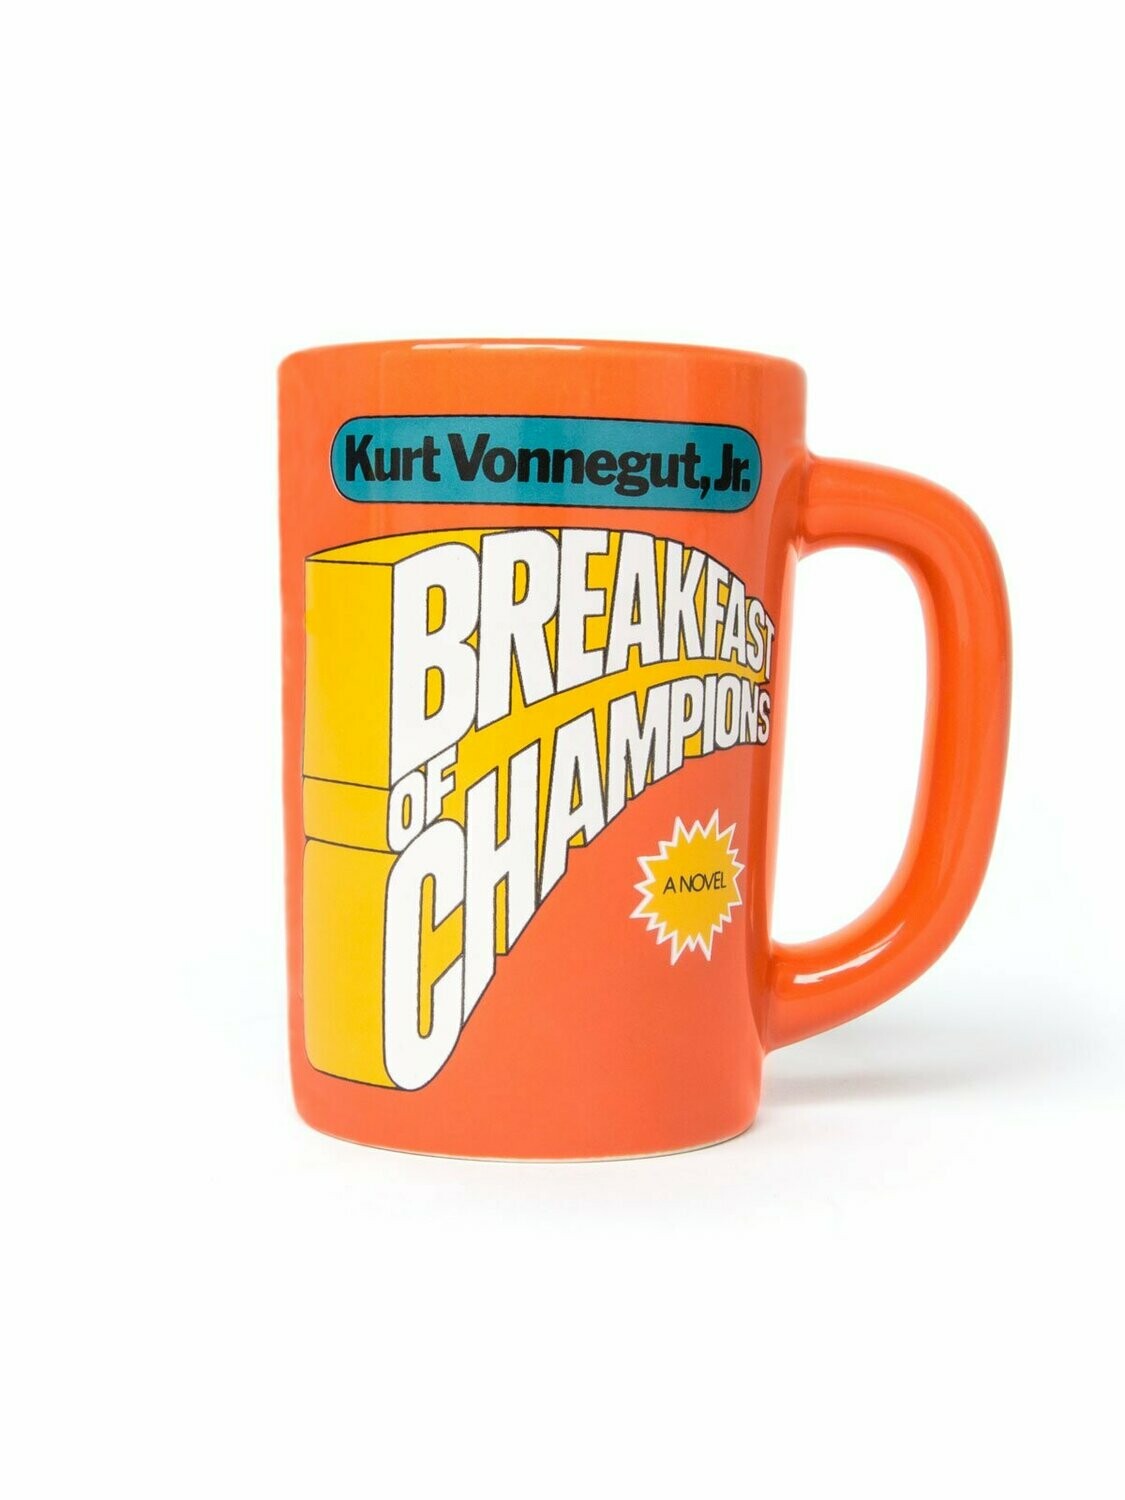 Breakfast of Champions mug